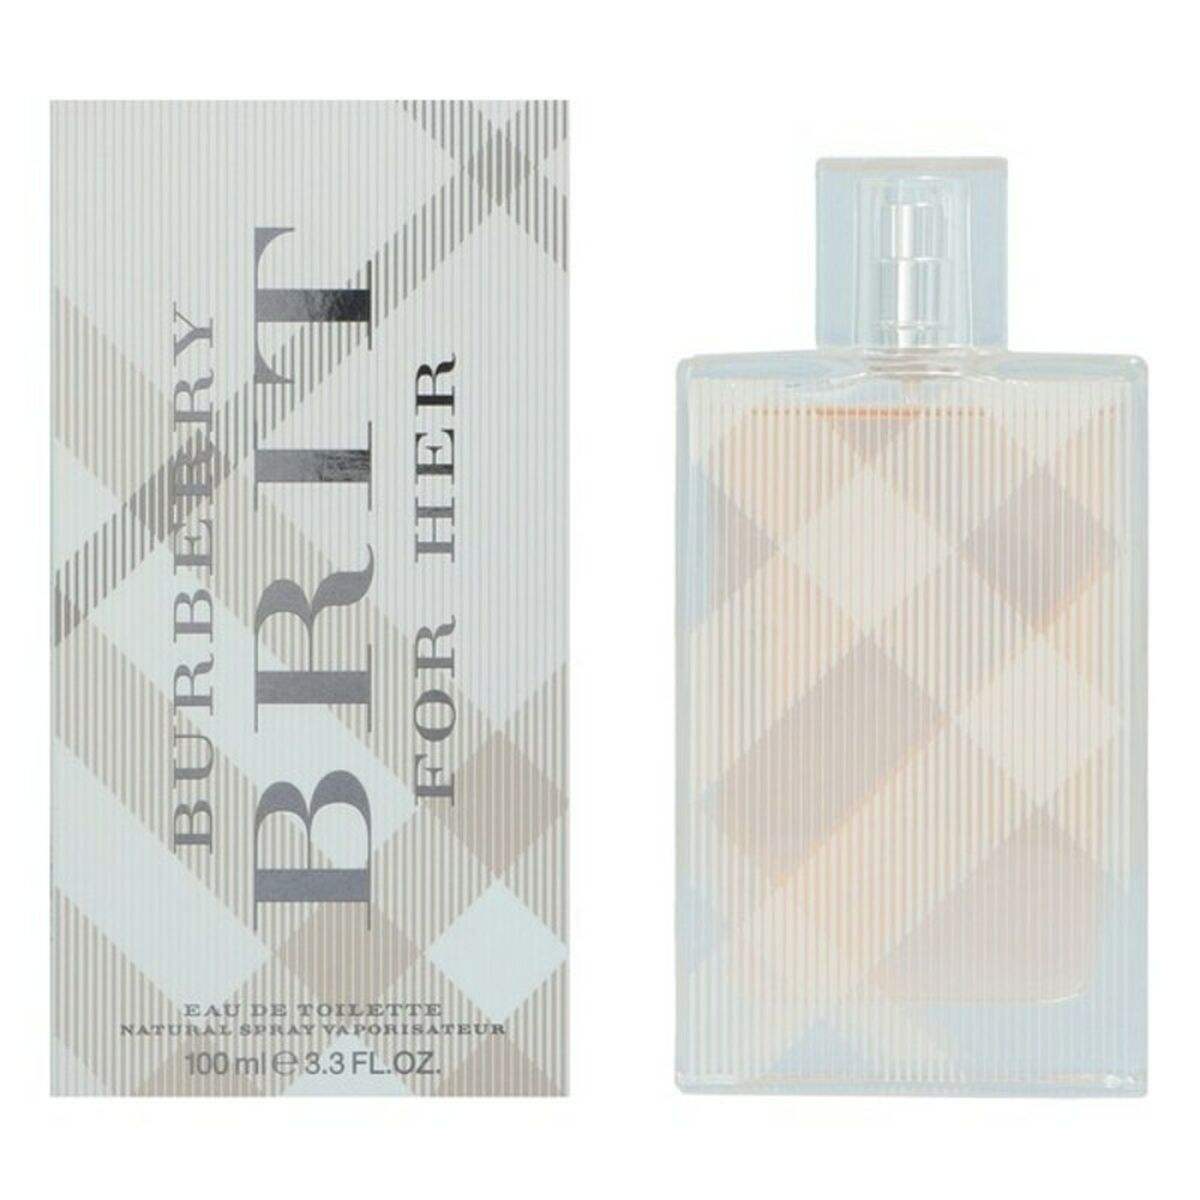 Parfum Femme Brit for Her Burberry EDT (100 ml) - Burberry - Jardin D'Eyden - jardindeyden.fr